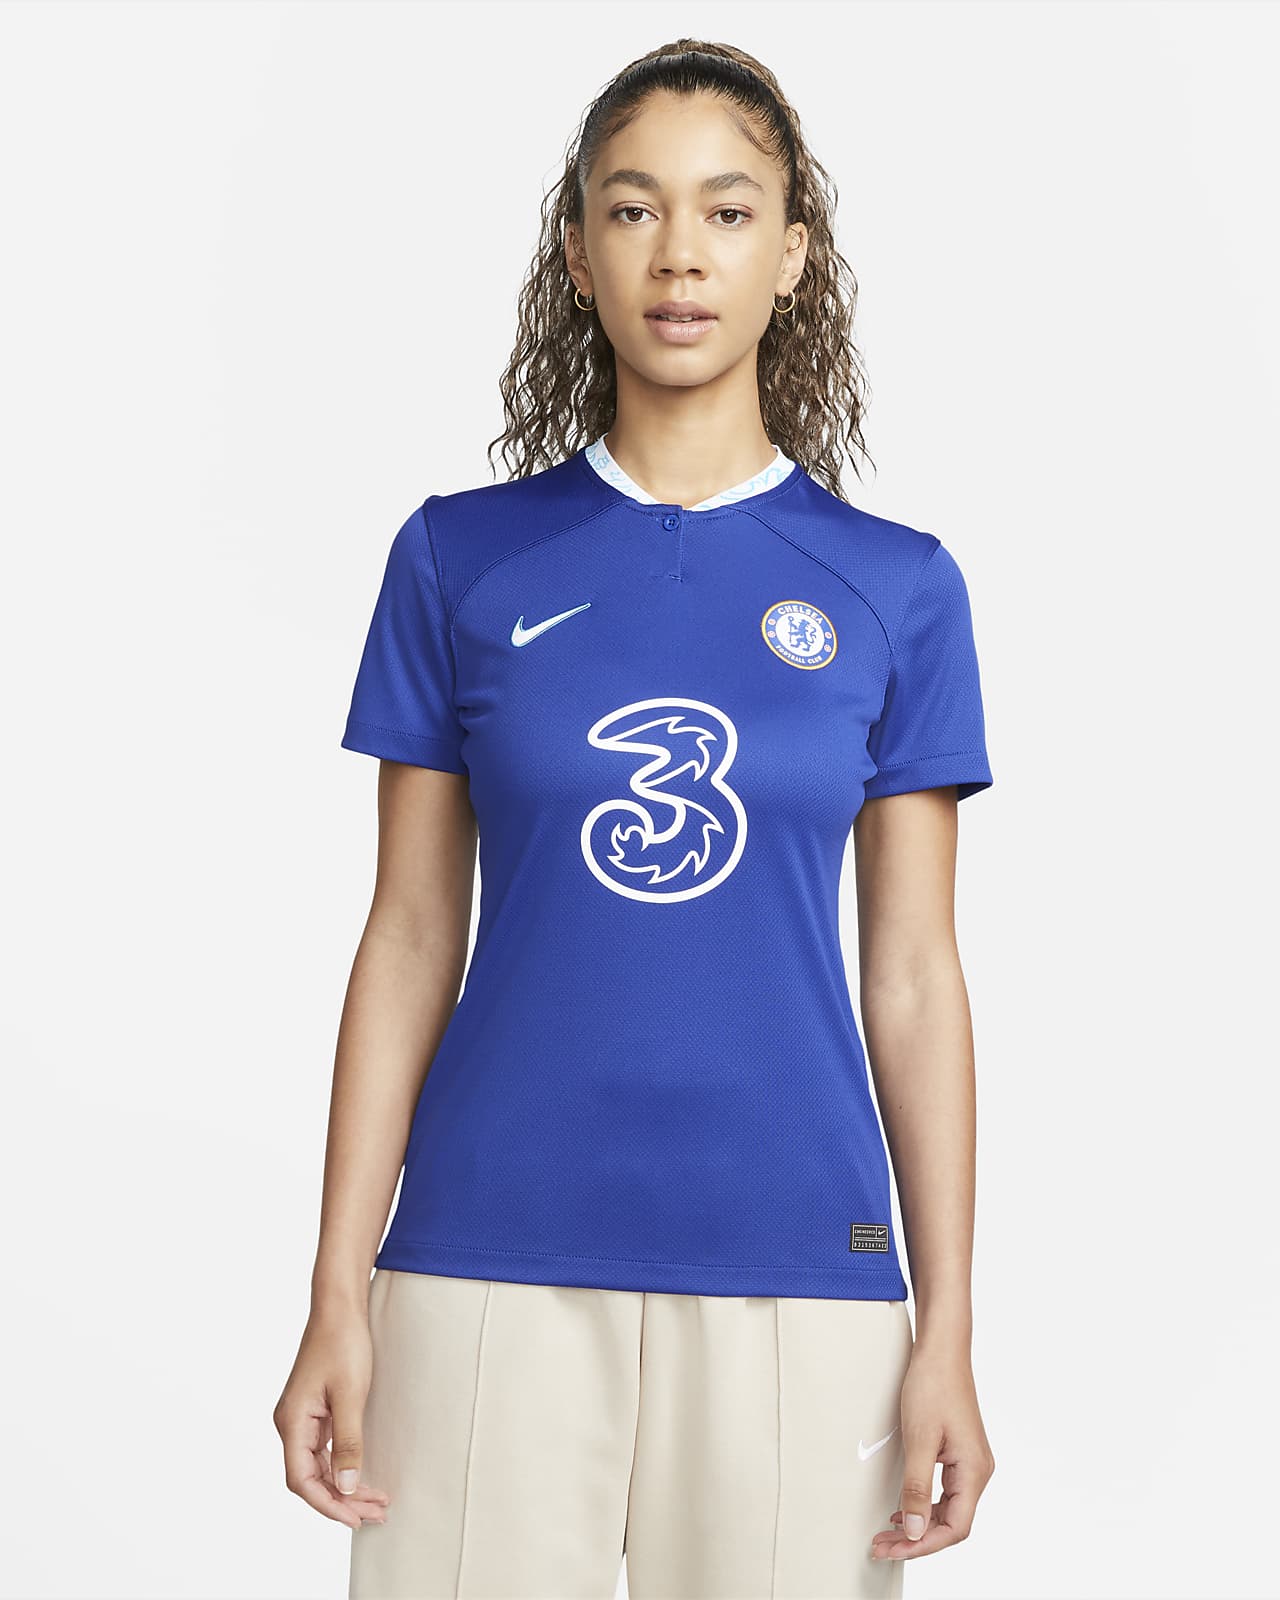 Chelsea F.C. chelsea air max jersey 2022/23 Stadium Home Women's Nike Dri-FIT Football